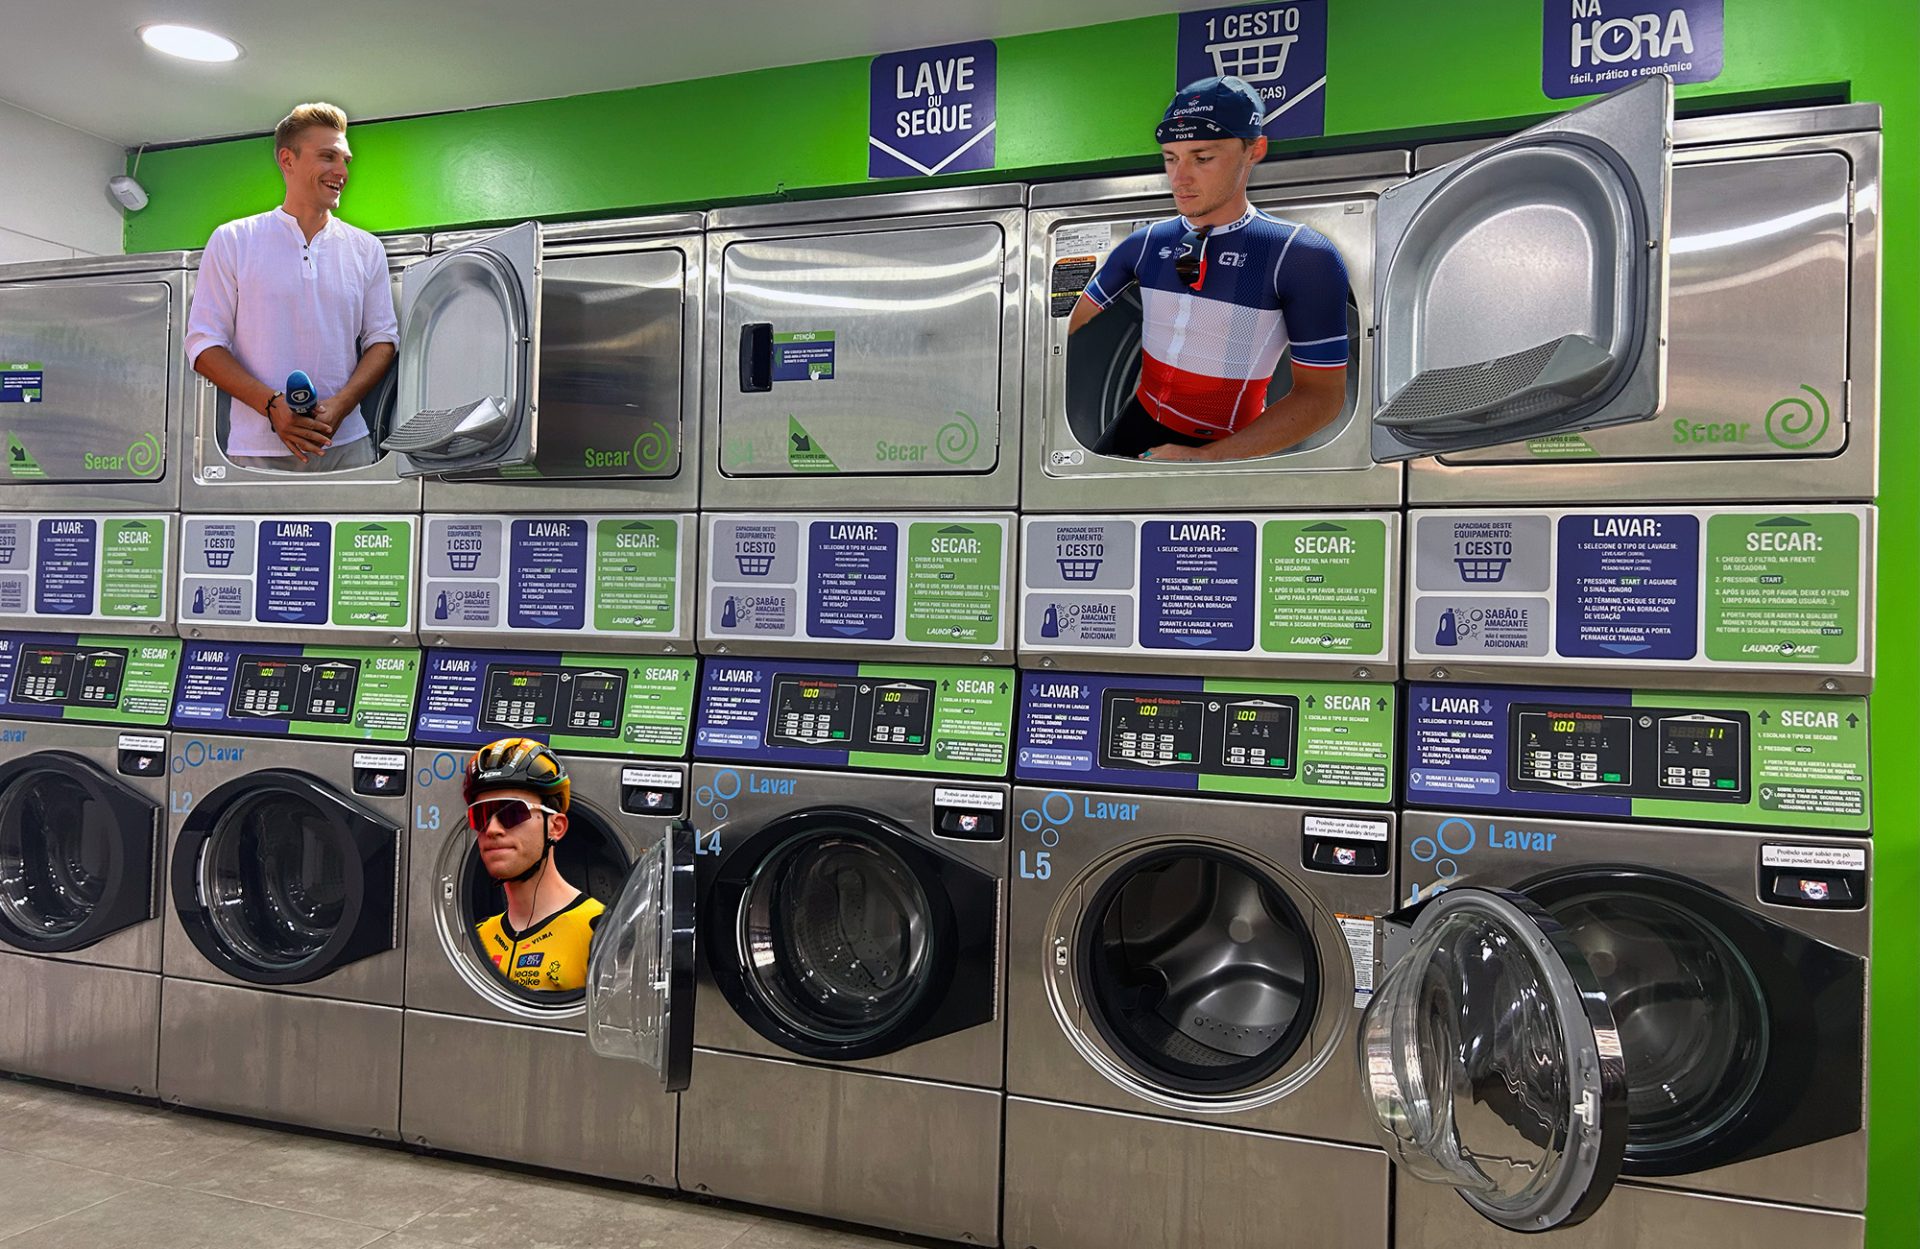 Marcel Kittel, Valentin Madouas and Michel Hessman inside a laundromat.